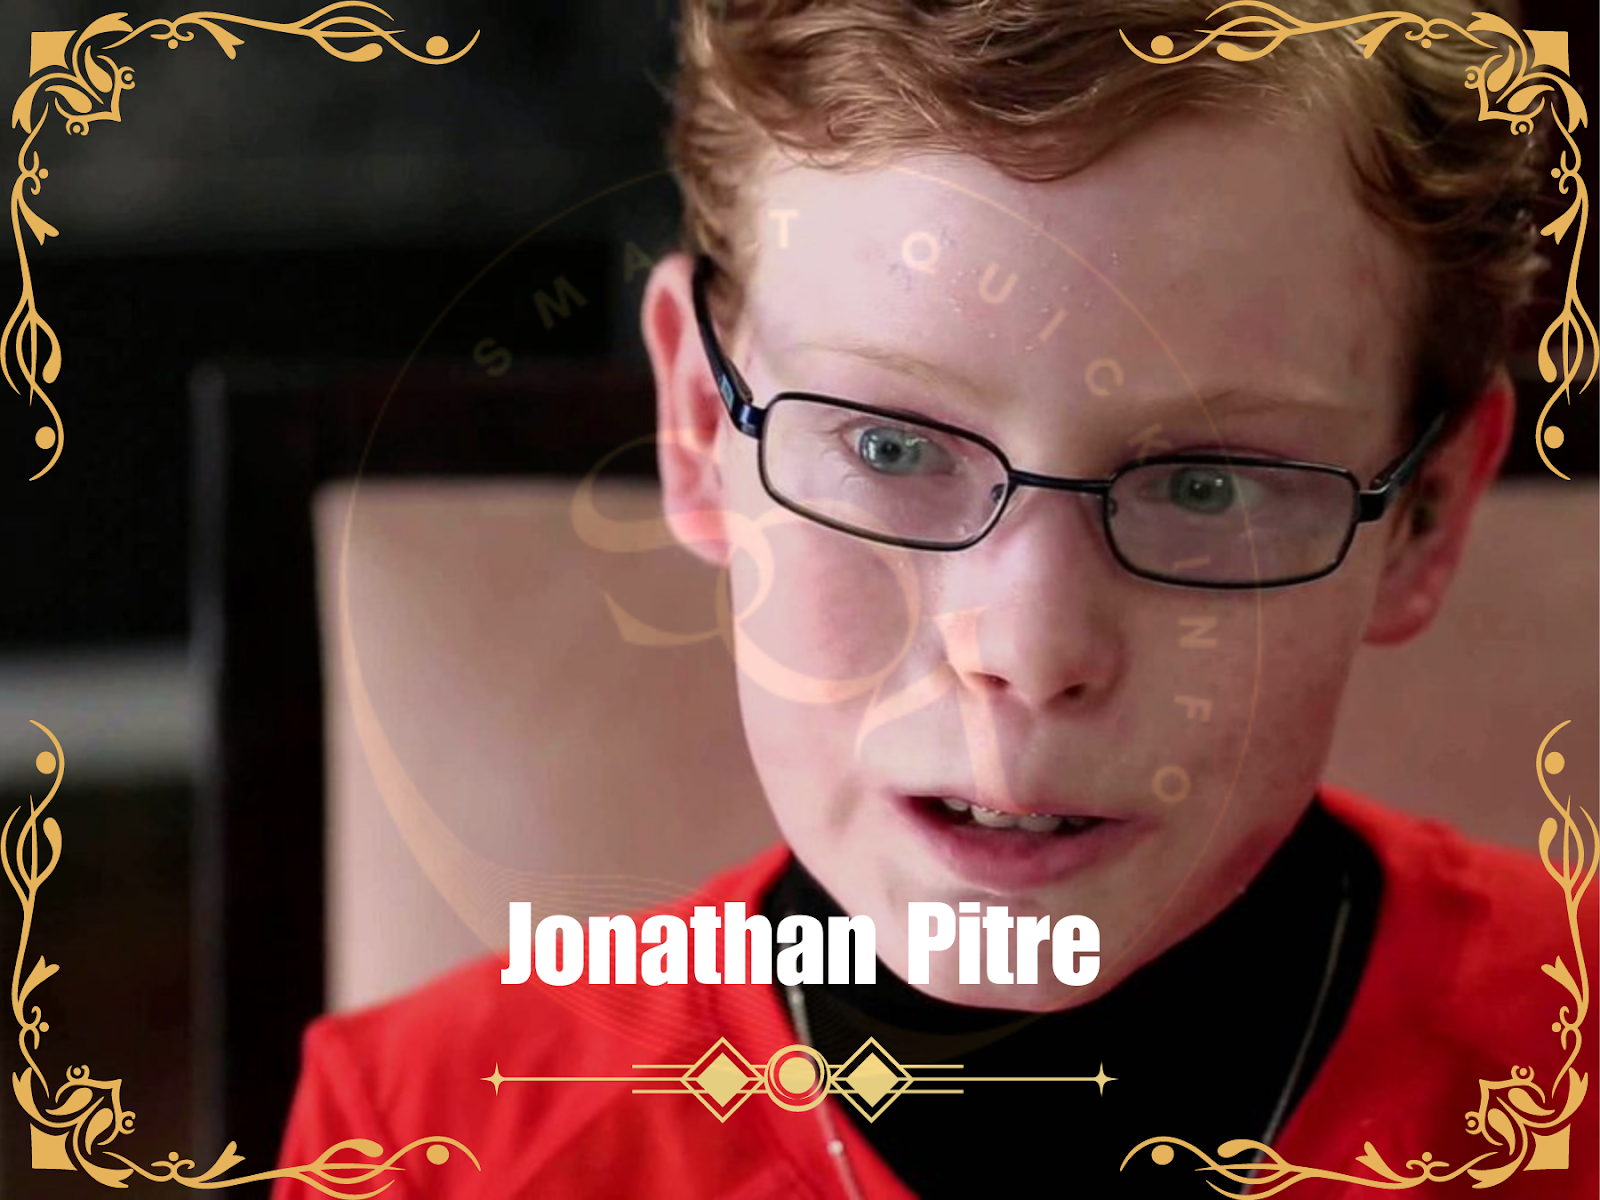 Inspirational Stories of Hope
Jonathan Pitre